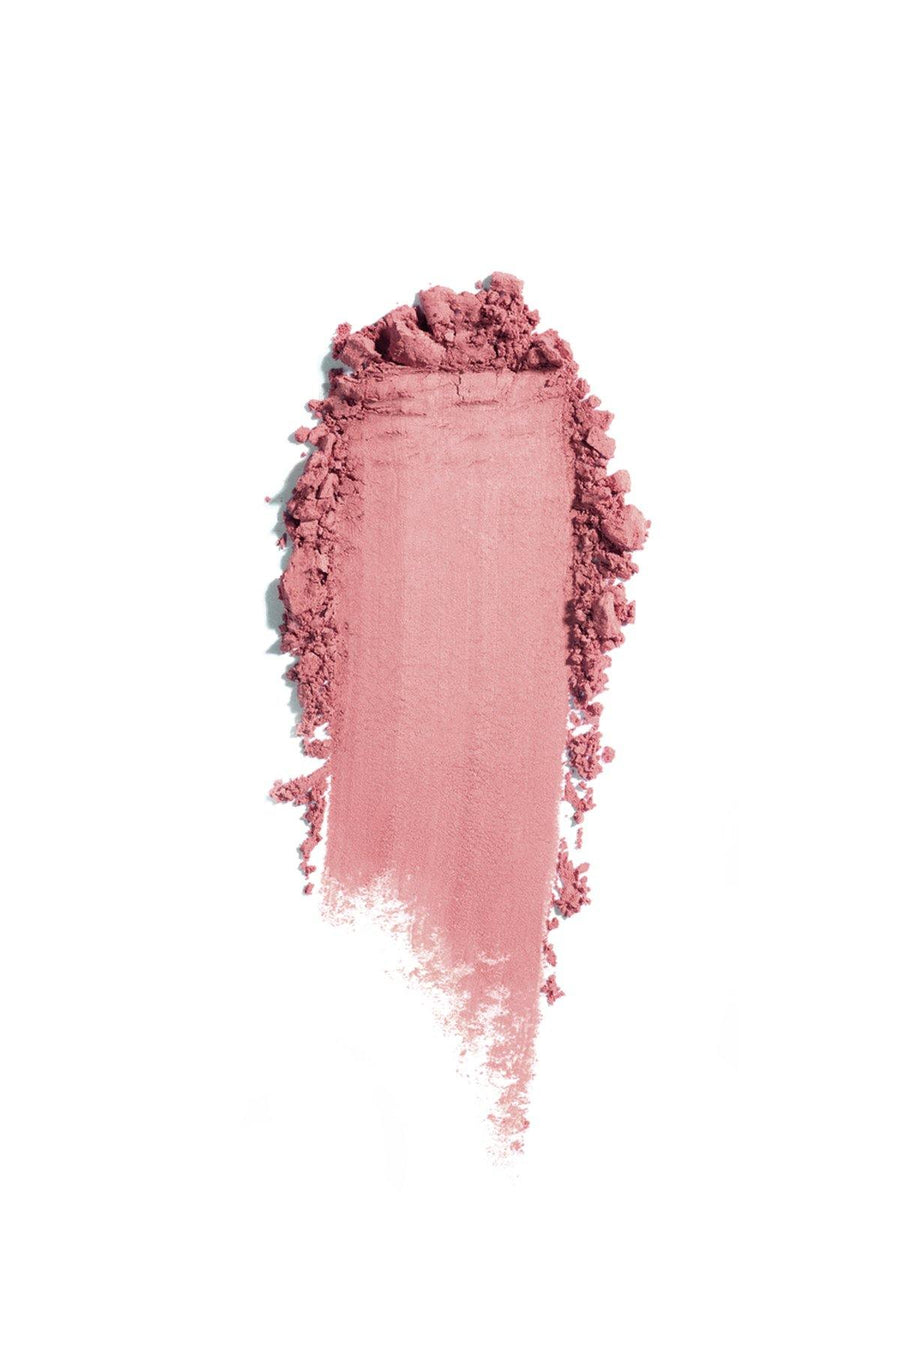 Matte Eyeshadow #69 - Coral Pink Matte - Blend Mineral Cosmetics